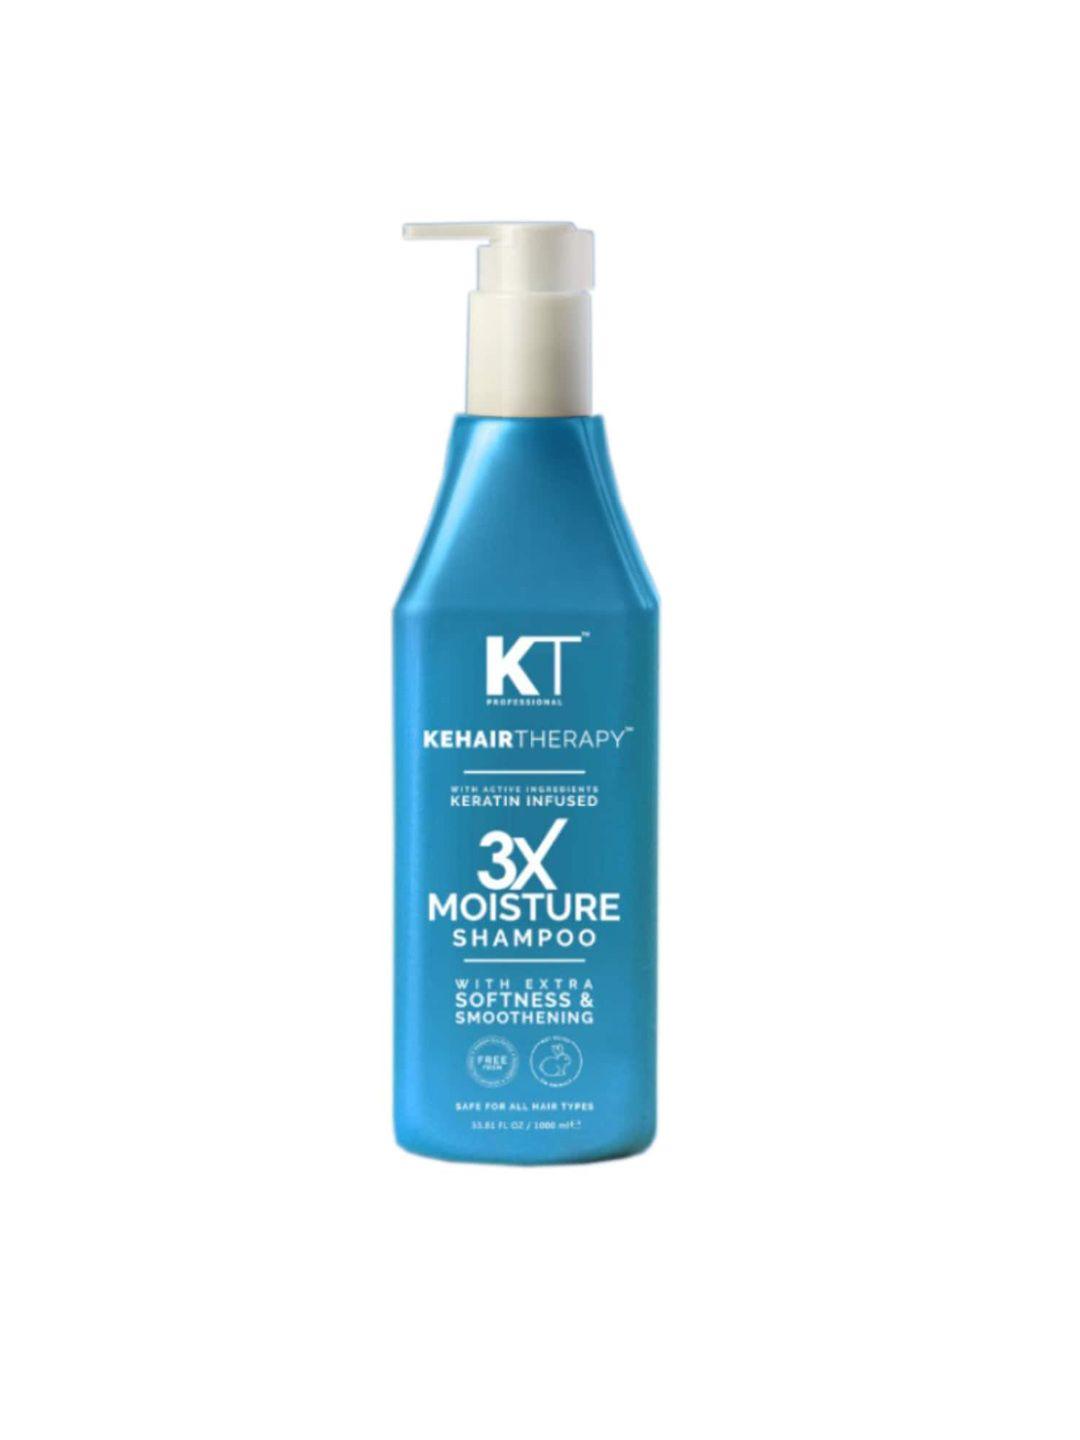 kehairtherapy keratin infused 3x moisture shampoo with extra softness - 1000 ml